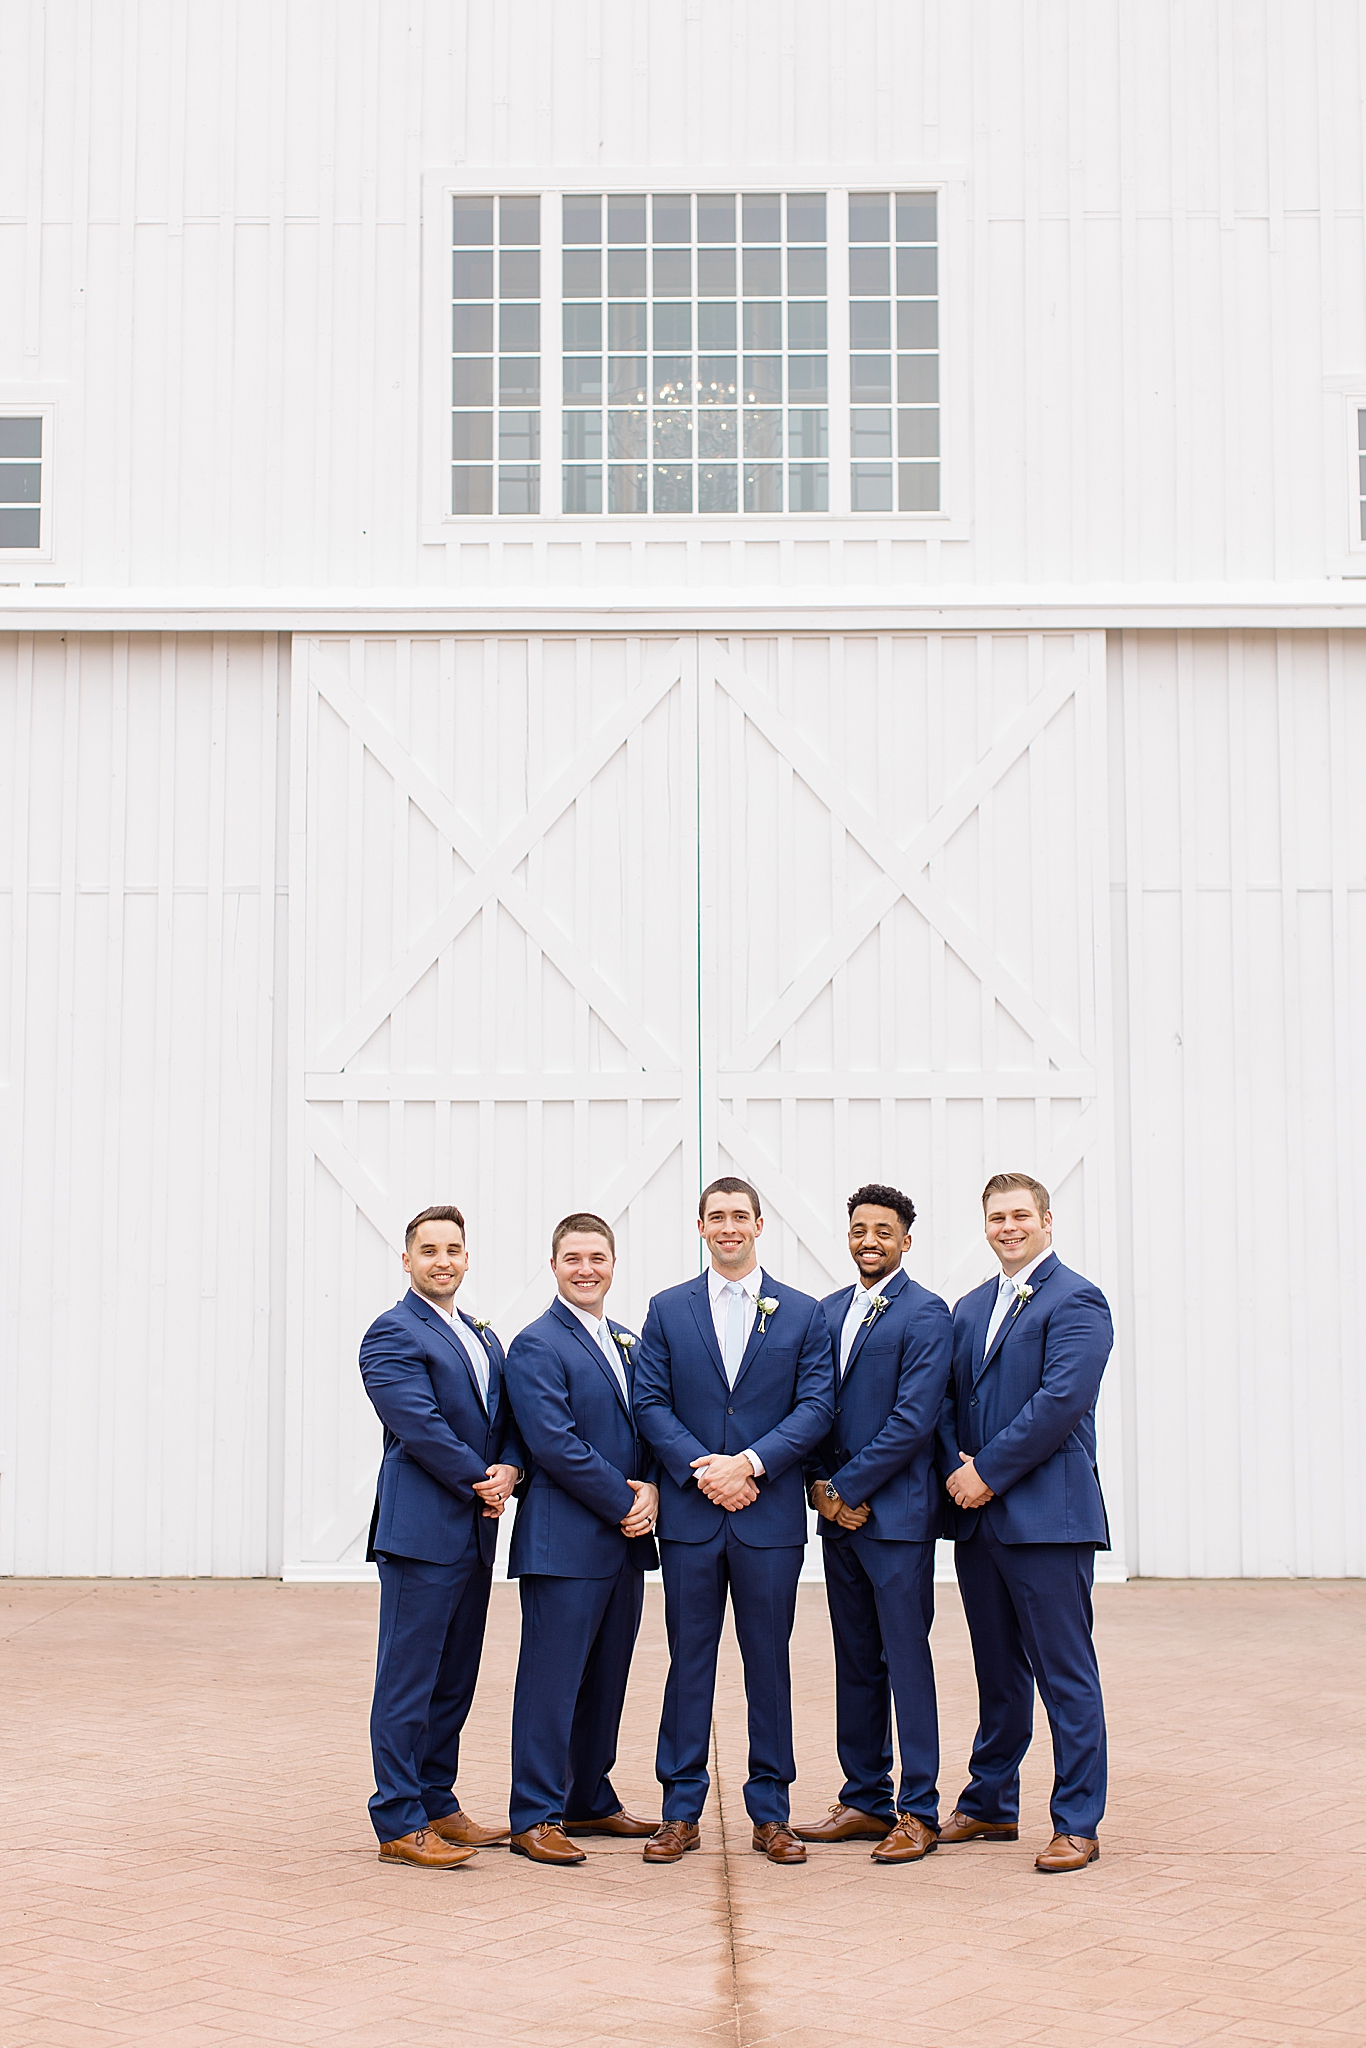 groom poses with groomsmen in navy suits